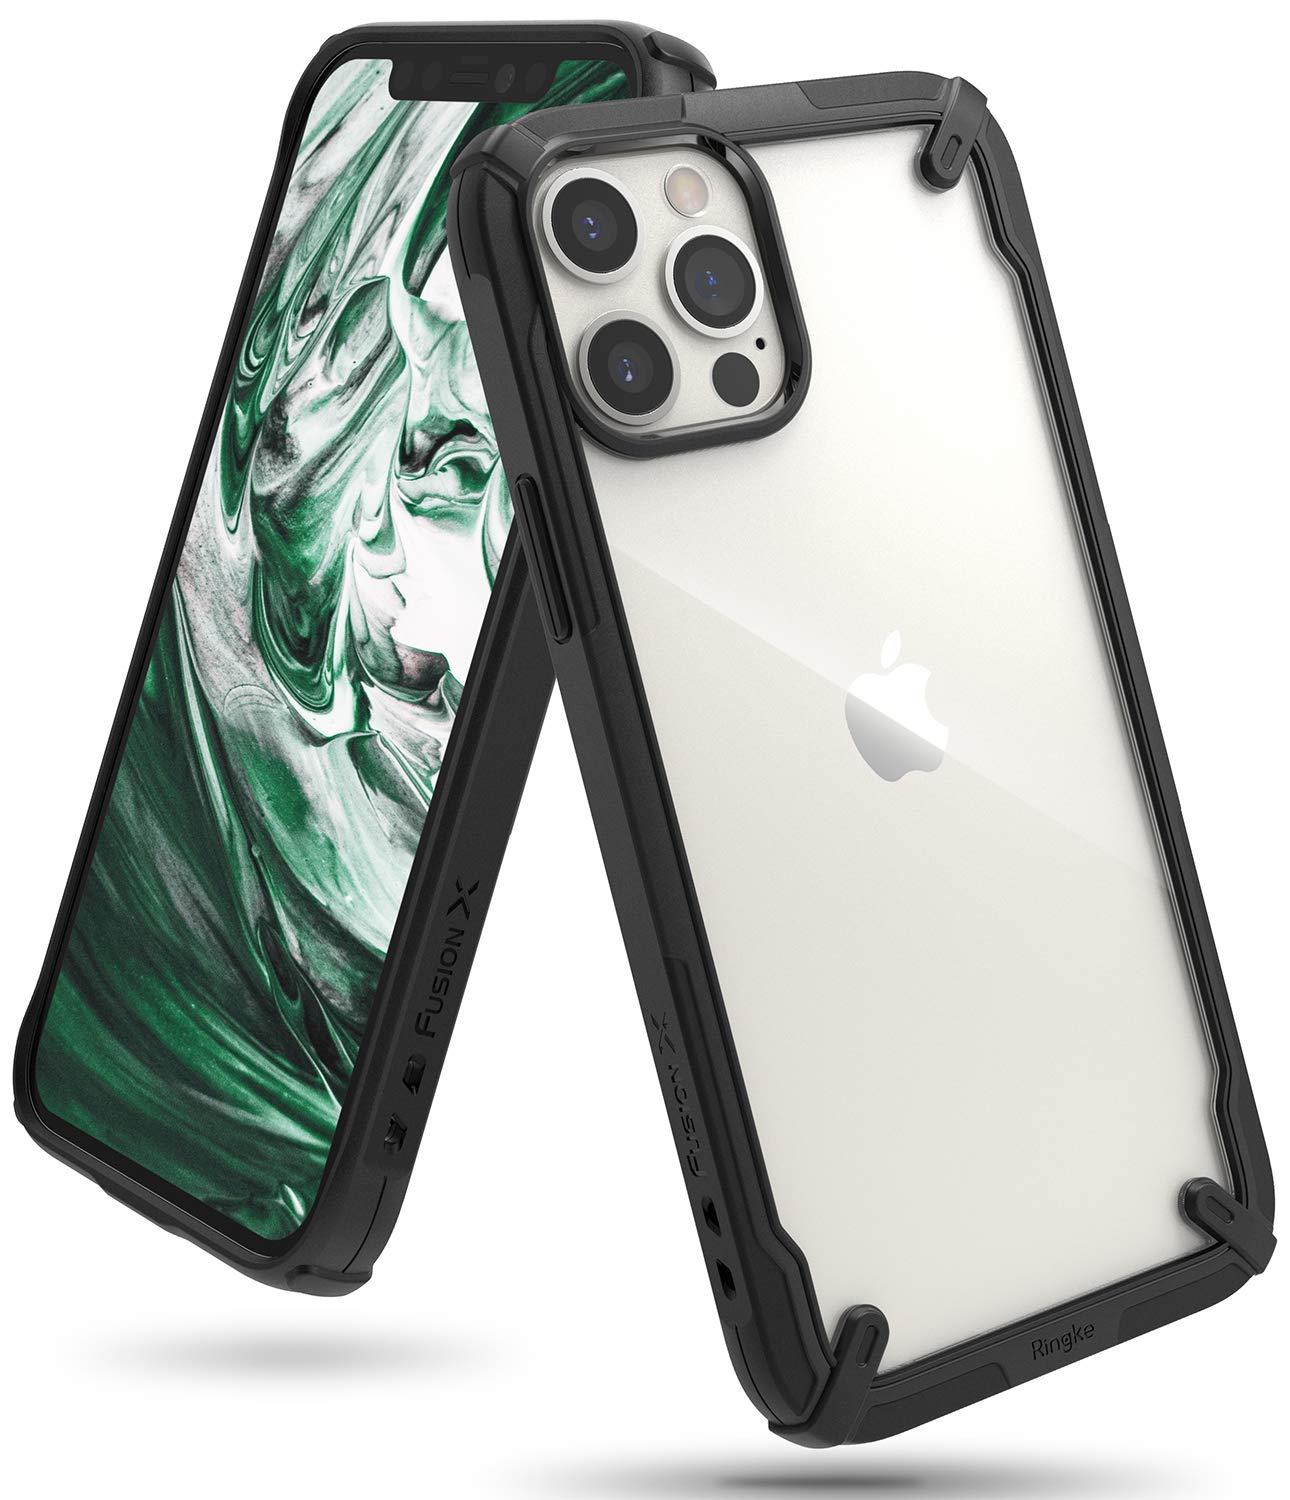 iphone 12 pro case